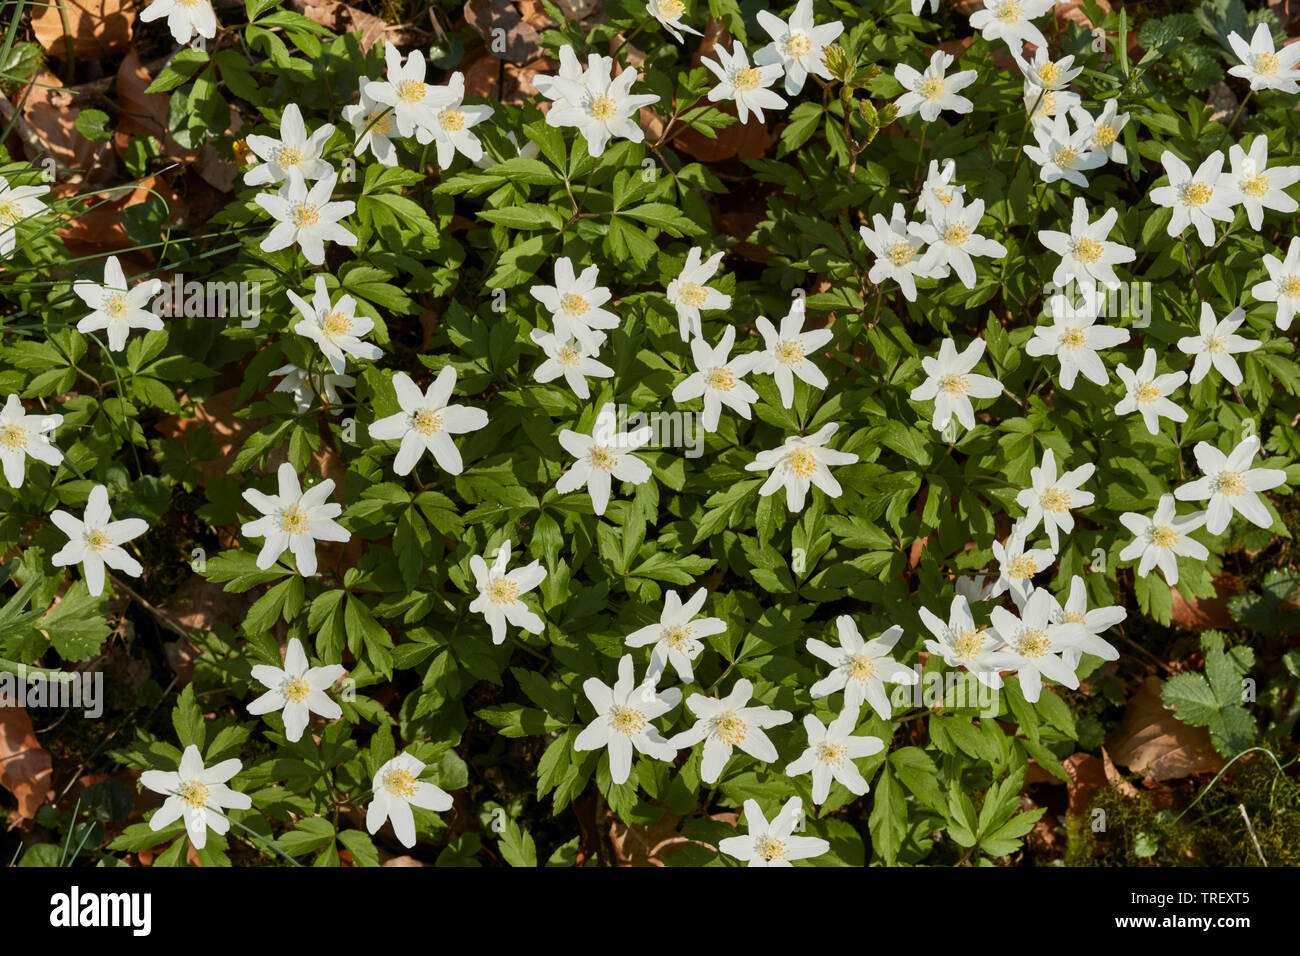 Wood Anemone, Windflower (Anemone nemorosa), flowering plants seen from above. Germany Stock Photo